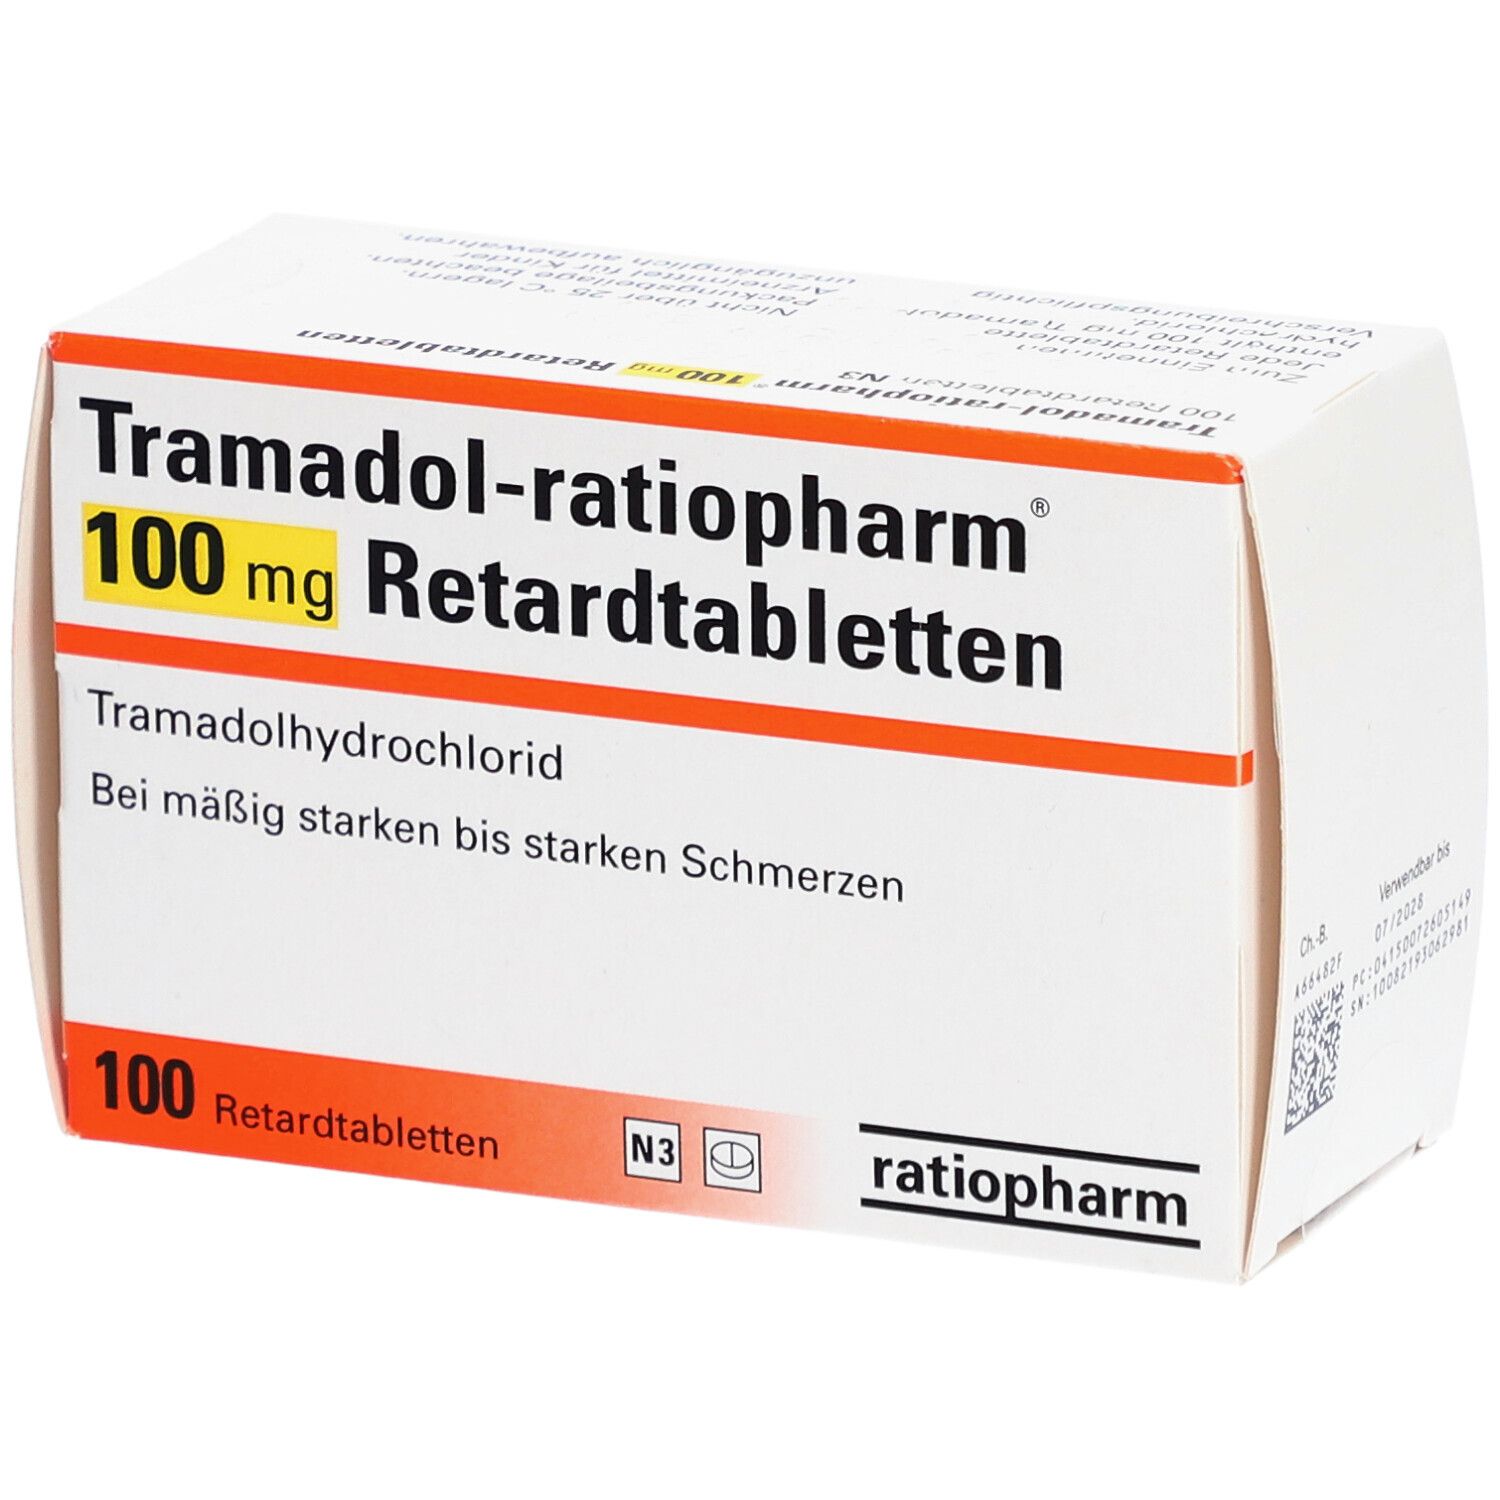 Tramadol-ratiopharm® 100 mg